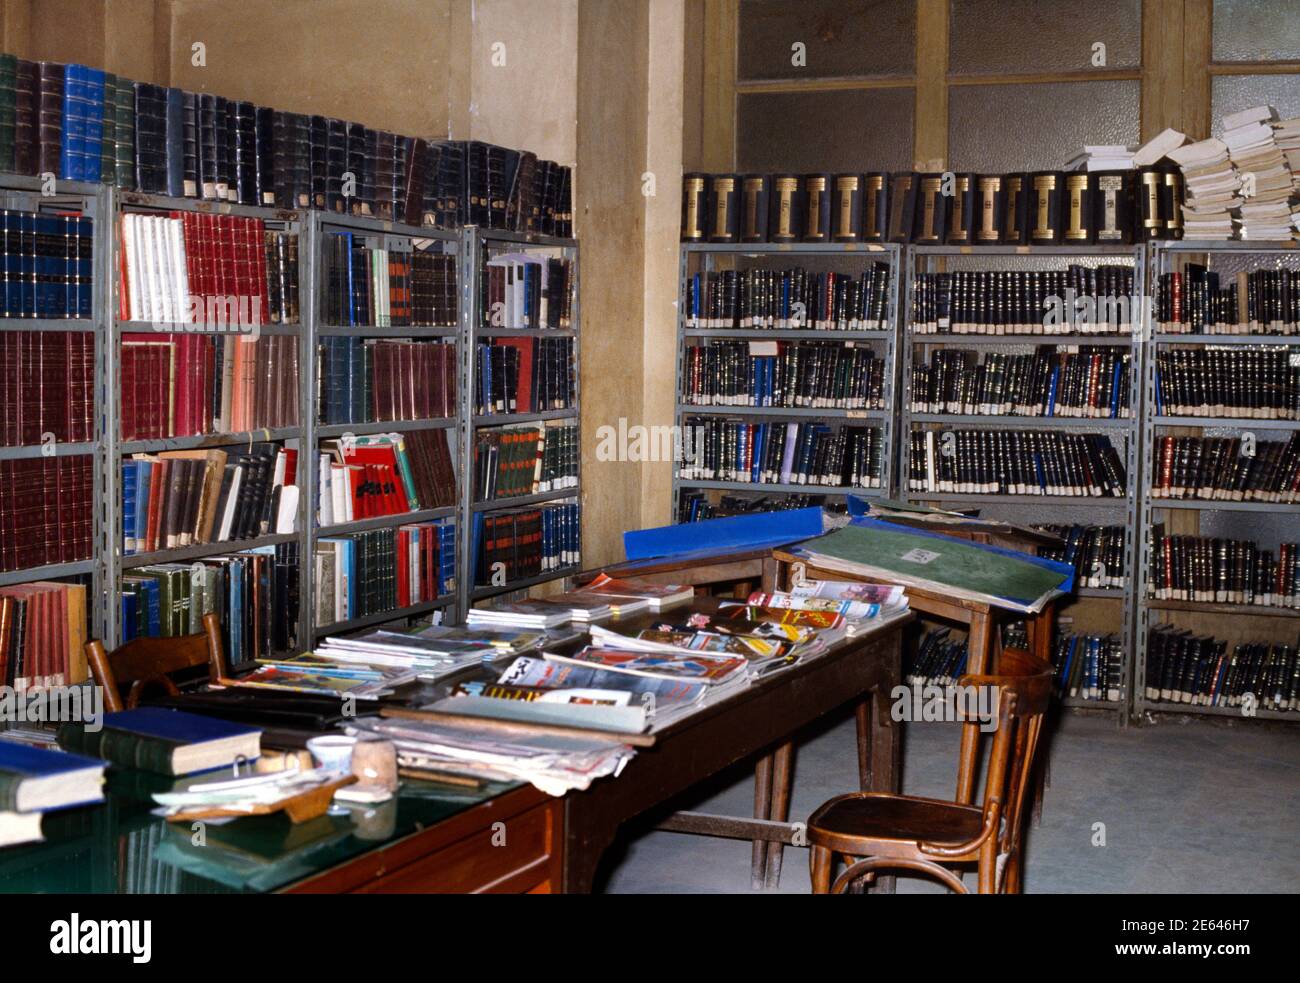 Cairo Egypt Shelves of Books in Islamic Library Stock Photo